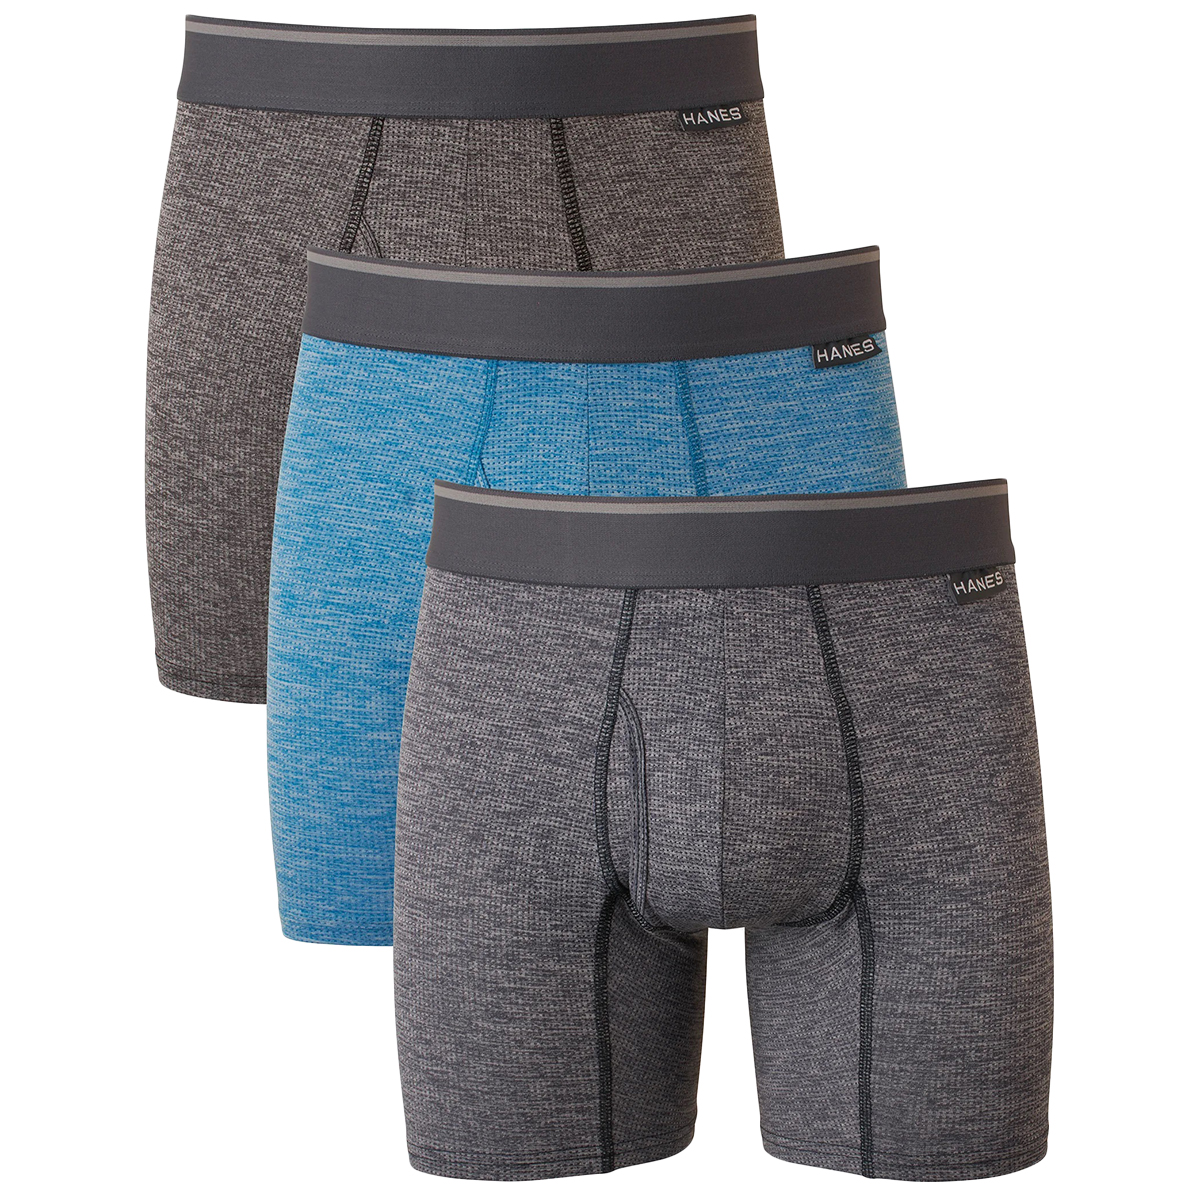 Hanes Men's Ultimate Comfort Flex Fit Breathable Stretch Boxer Briefs, 3-Pack